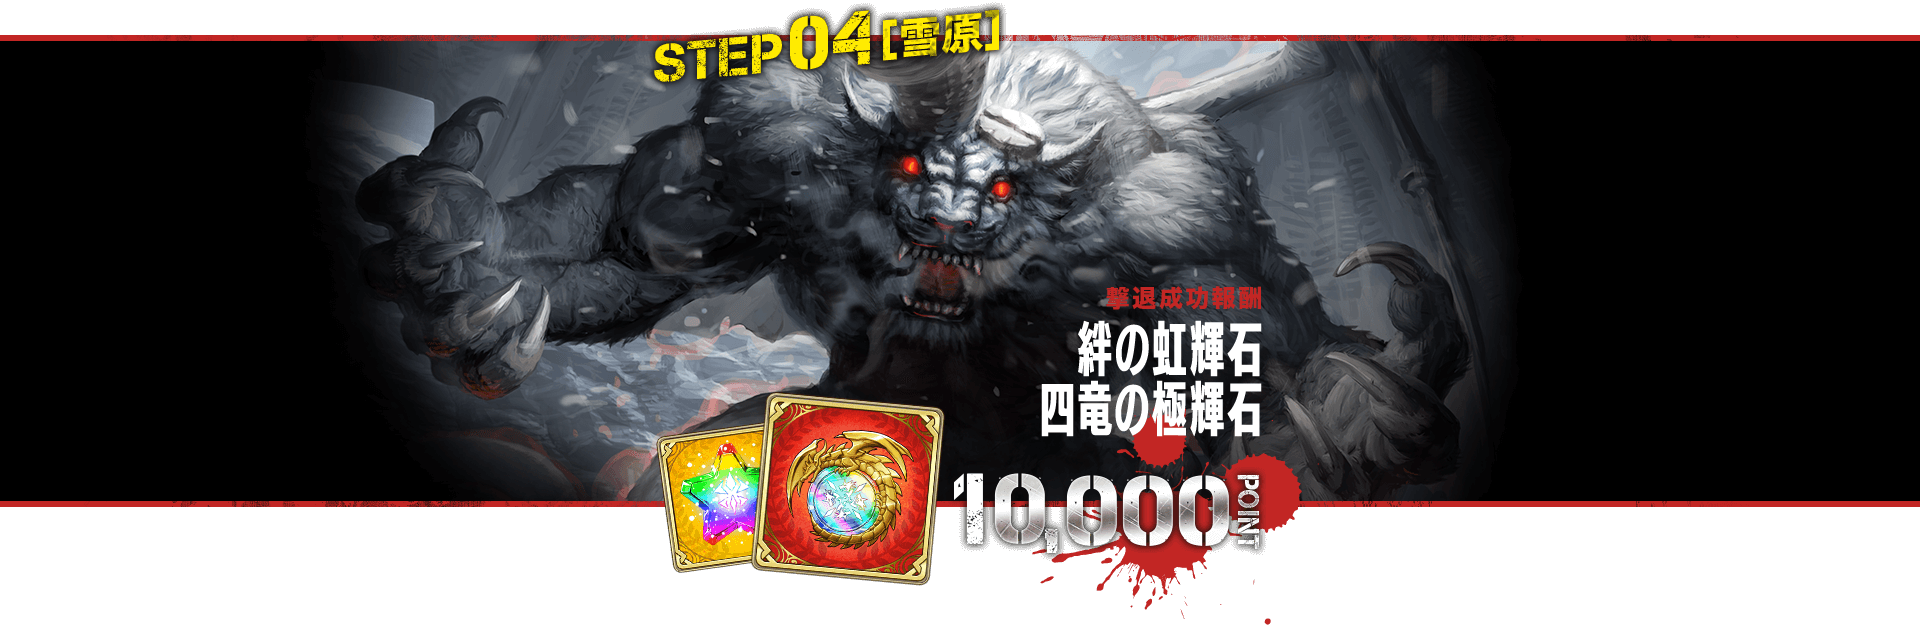 STEP04[雪原] 10000POINT